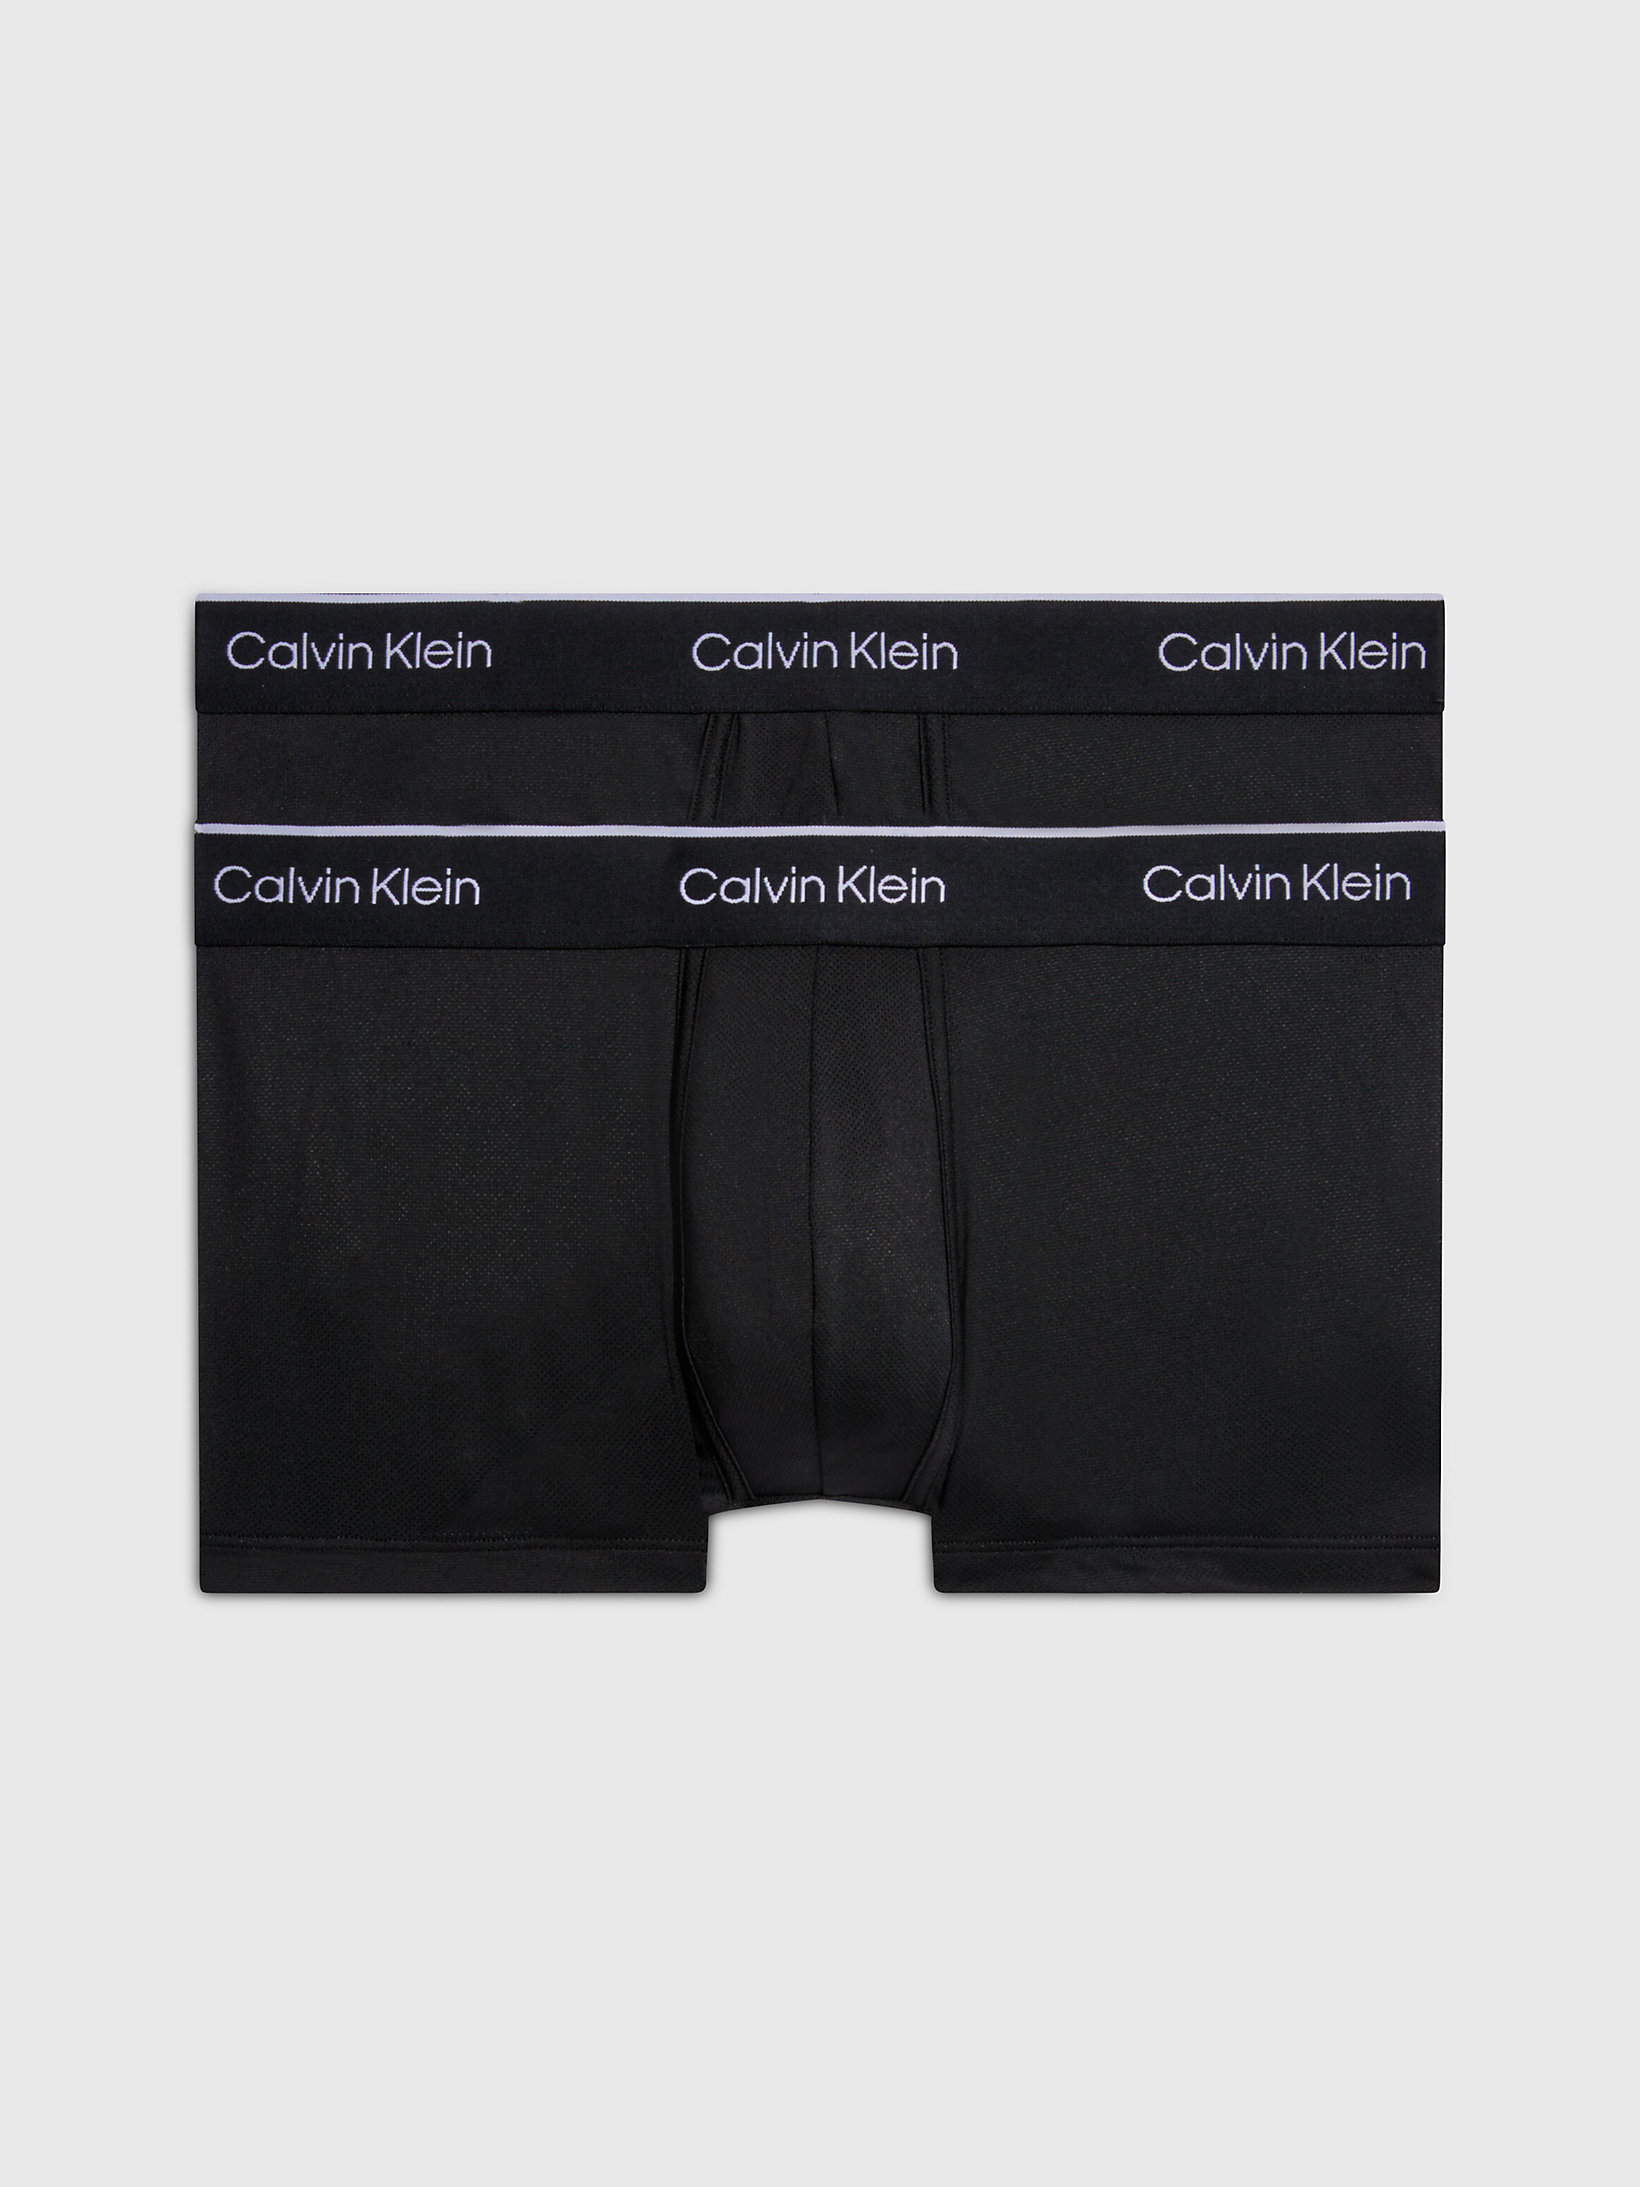 Black/black > Комплект боксеров низкой посадки 2 шт. - CK Pro Air > undefined женщины - Calvin Klein